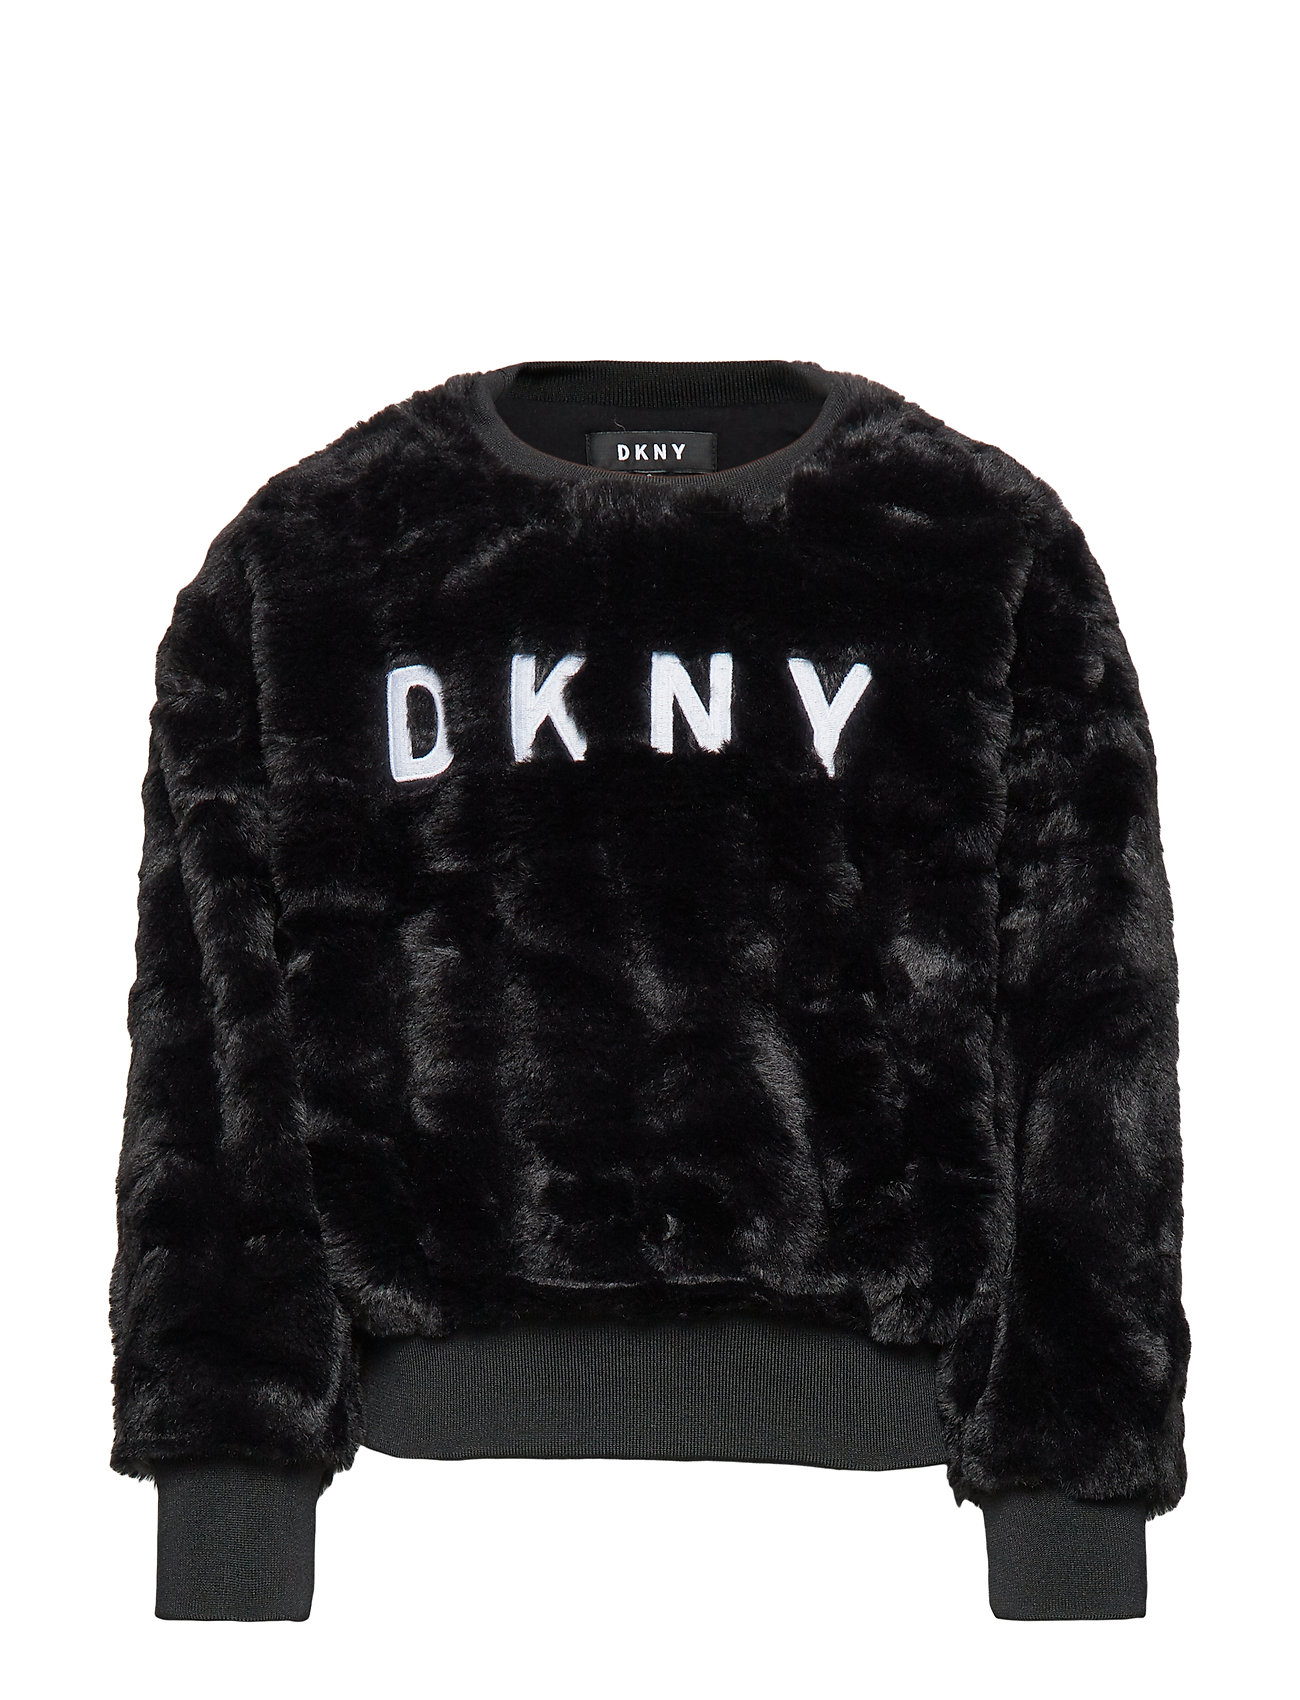 dkny black sweater